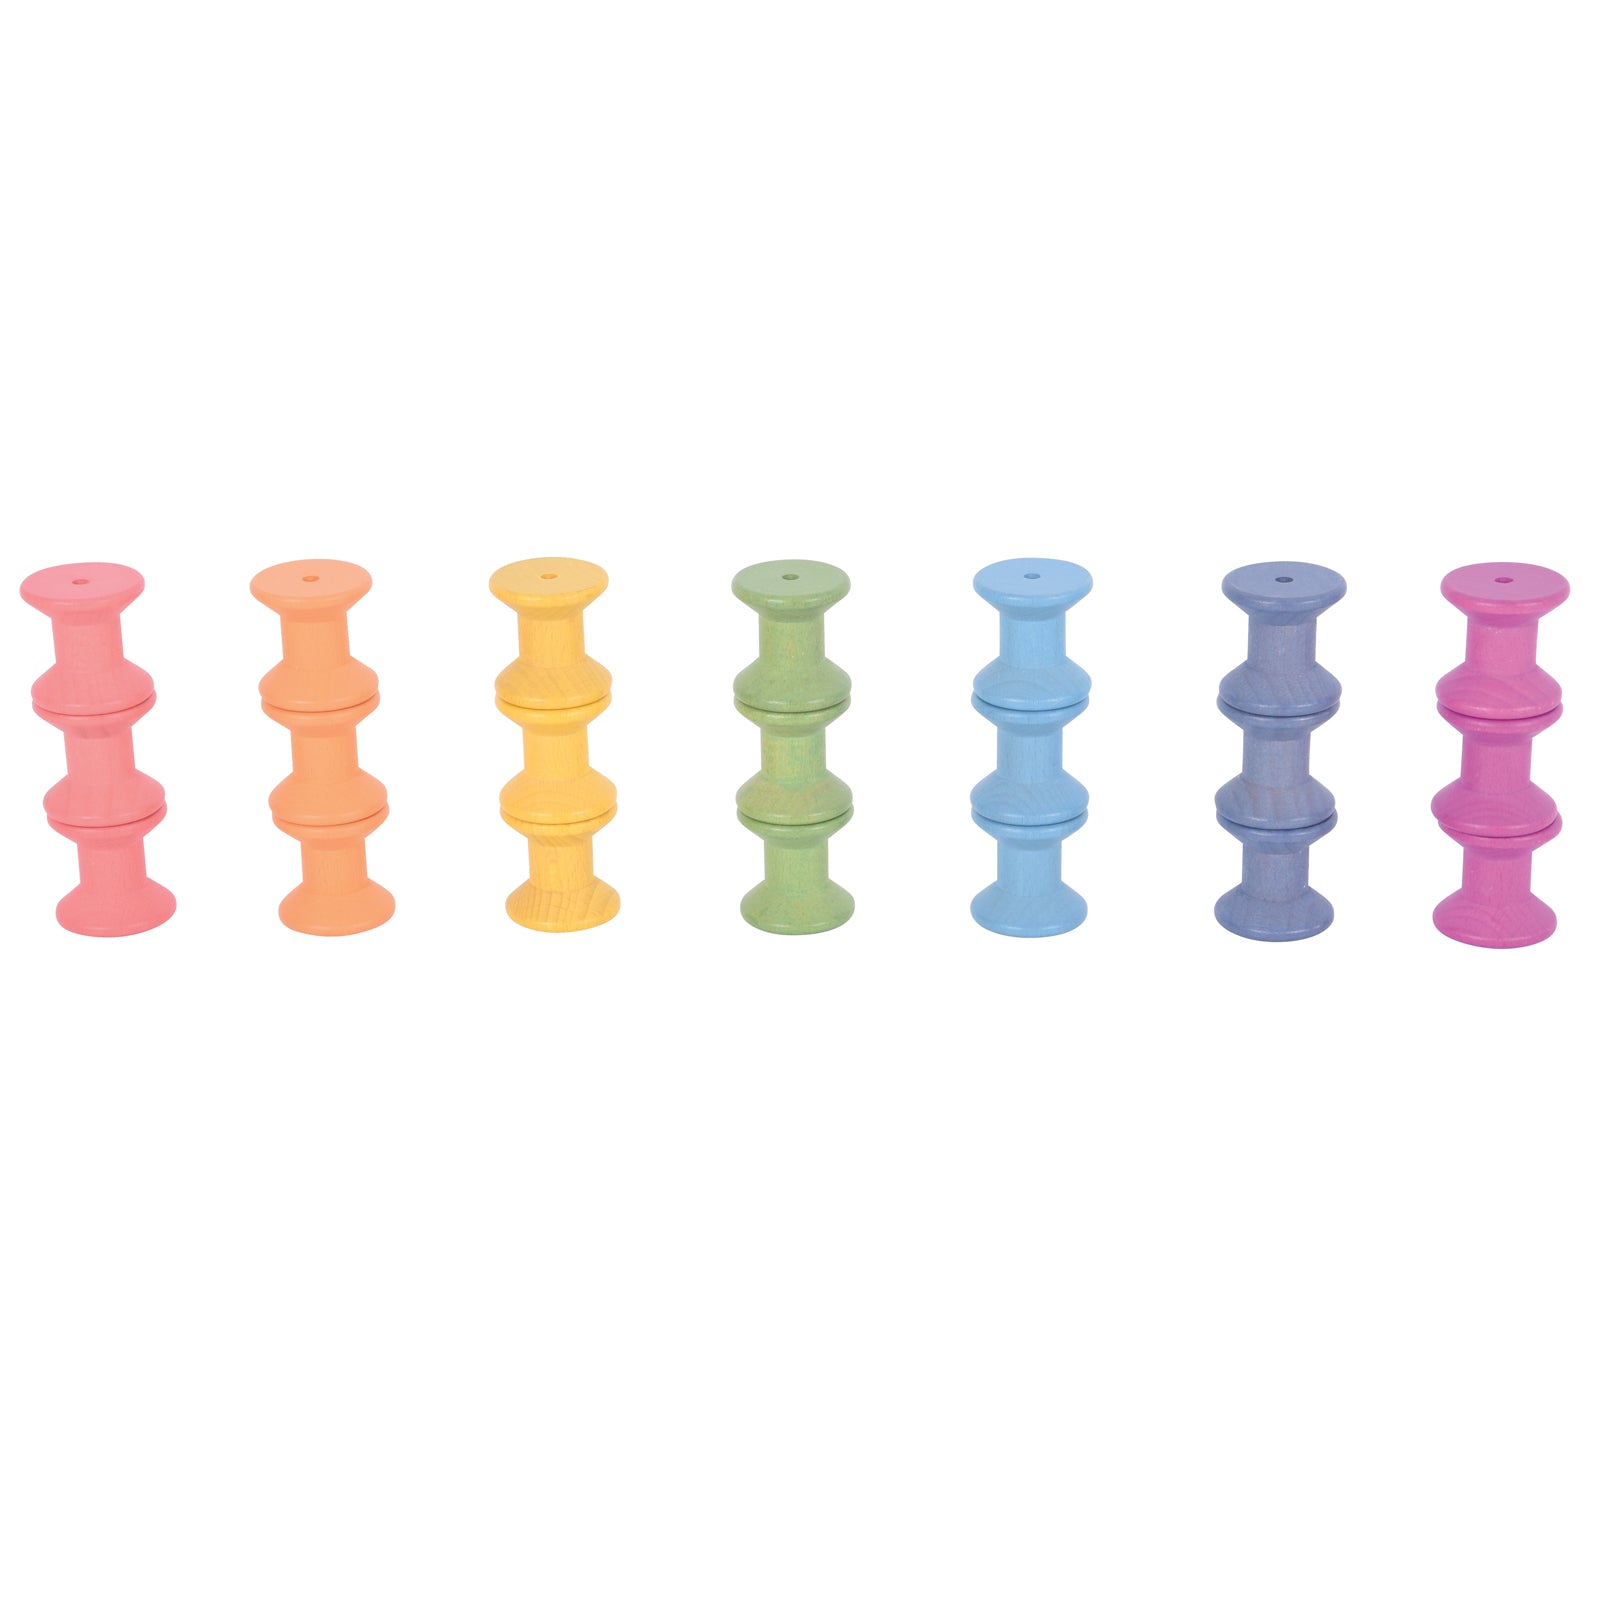 Rainbow Wooden Spools - Set of 21